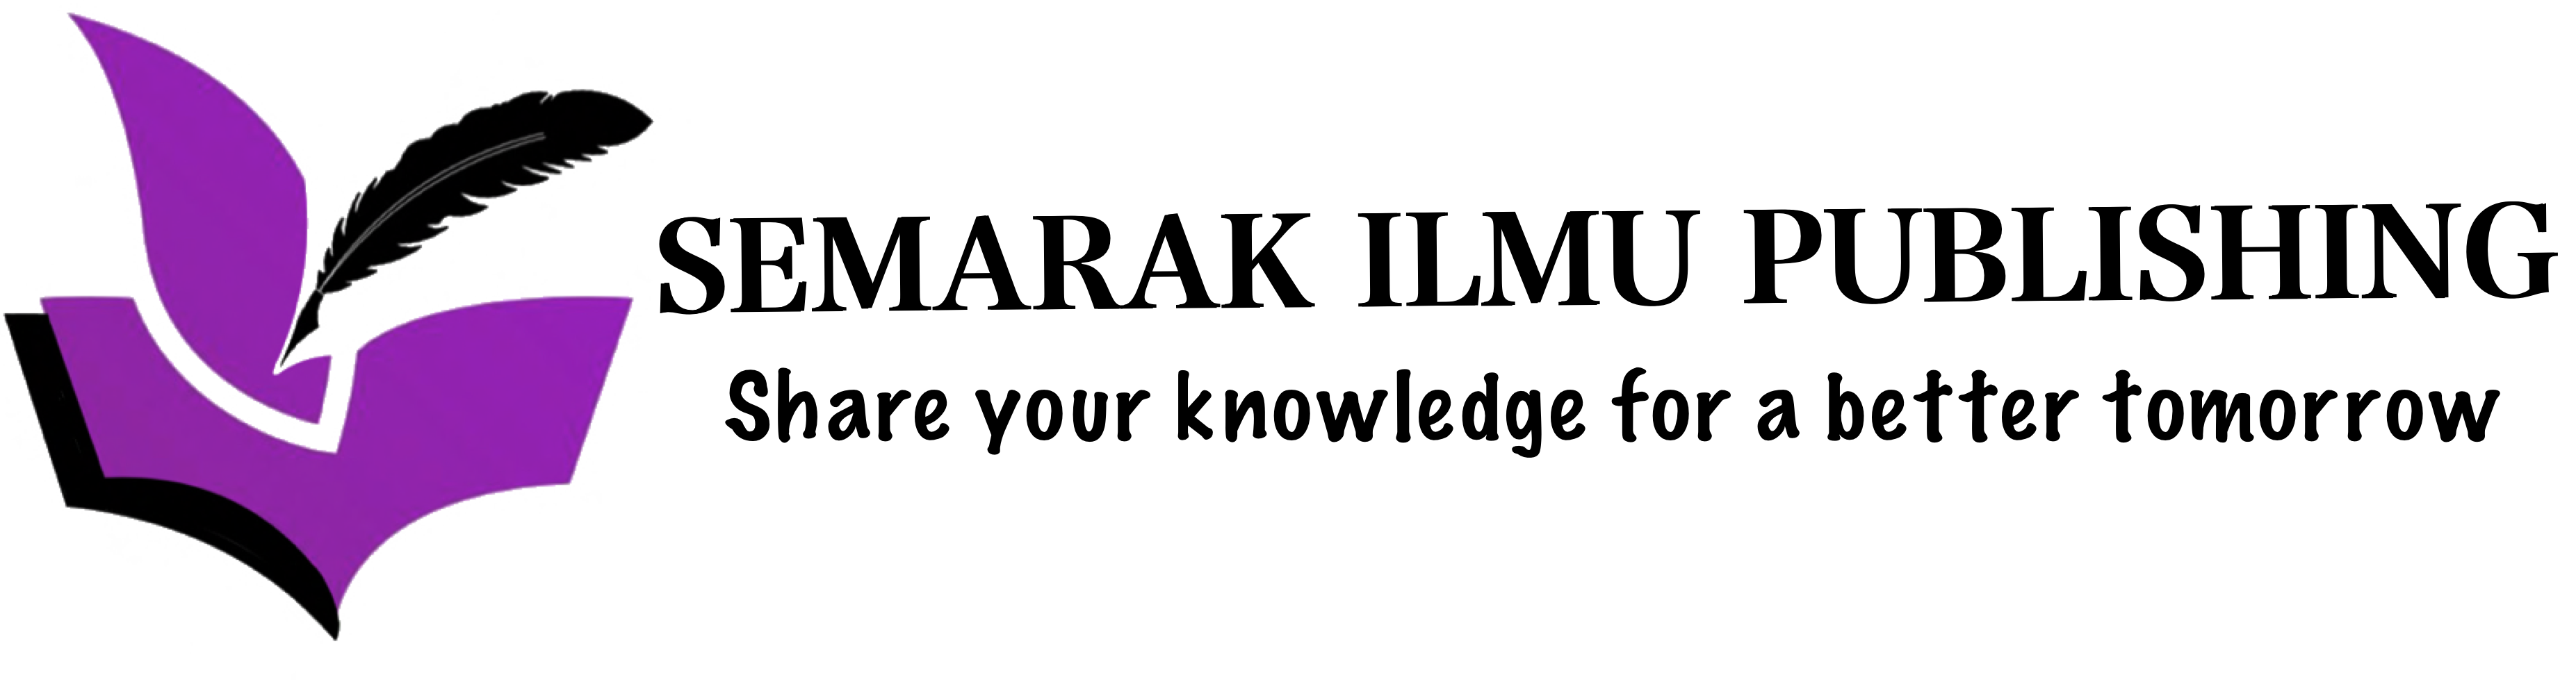 semarak-ilmu-publishing-logo.png